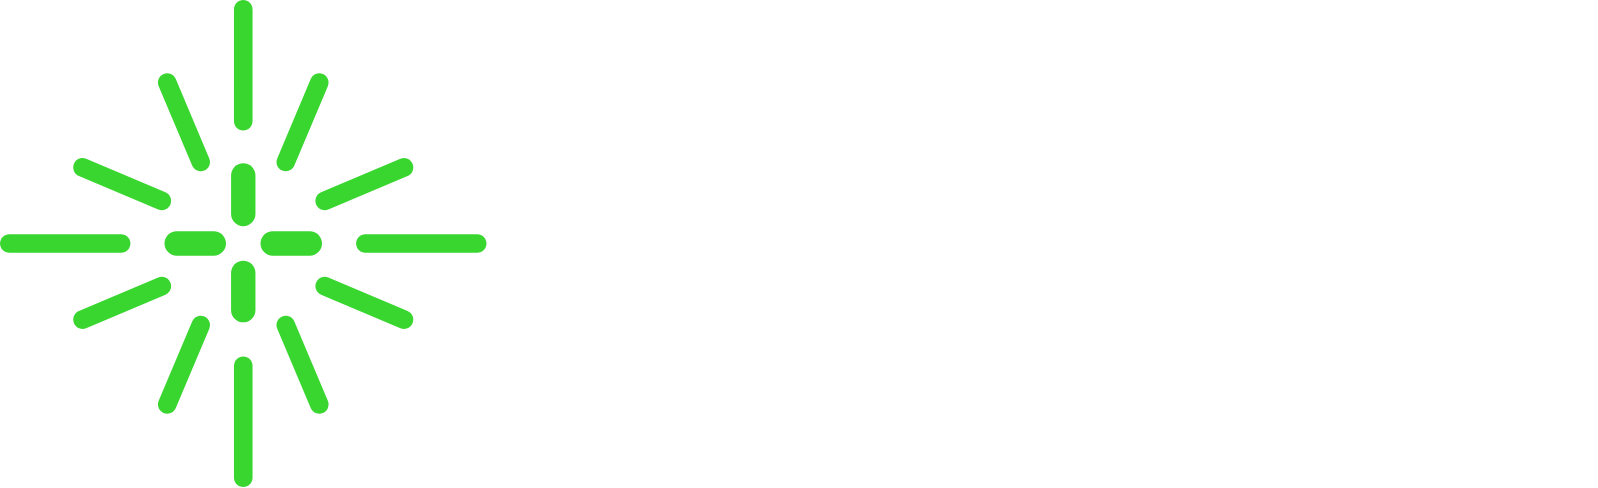 Kyverna Therapeutics logo large for dark backgrounds (transparent PNG)